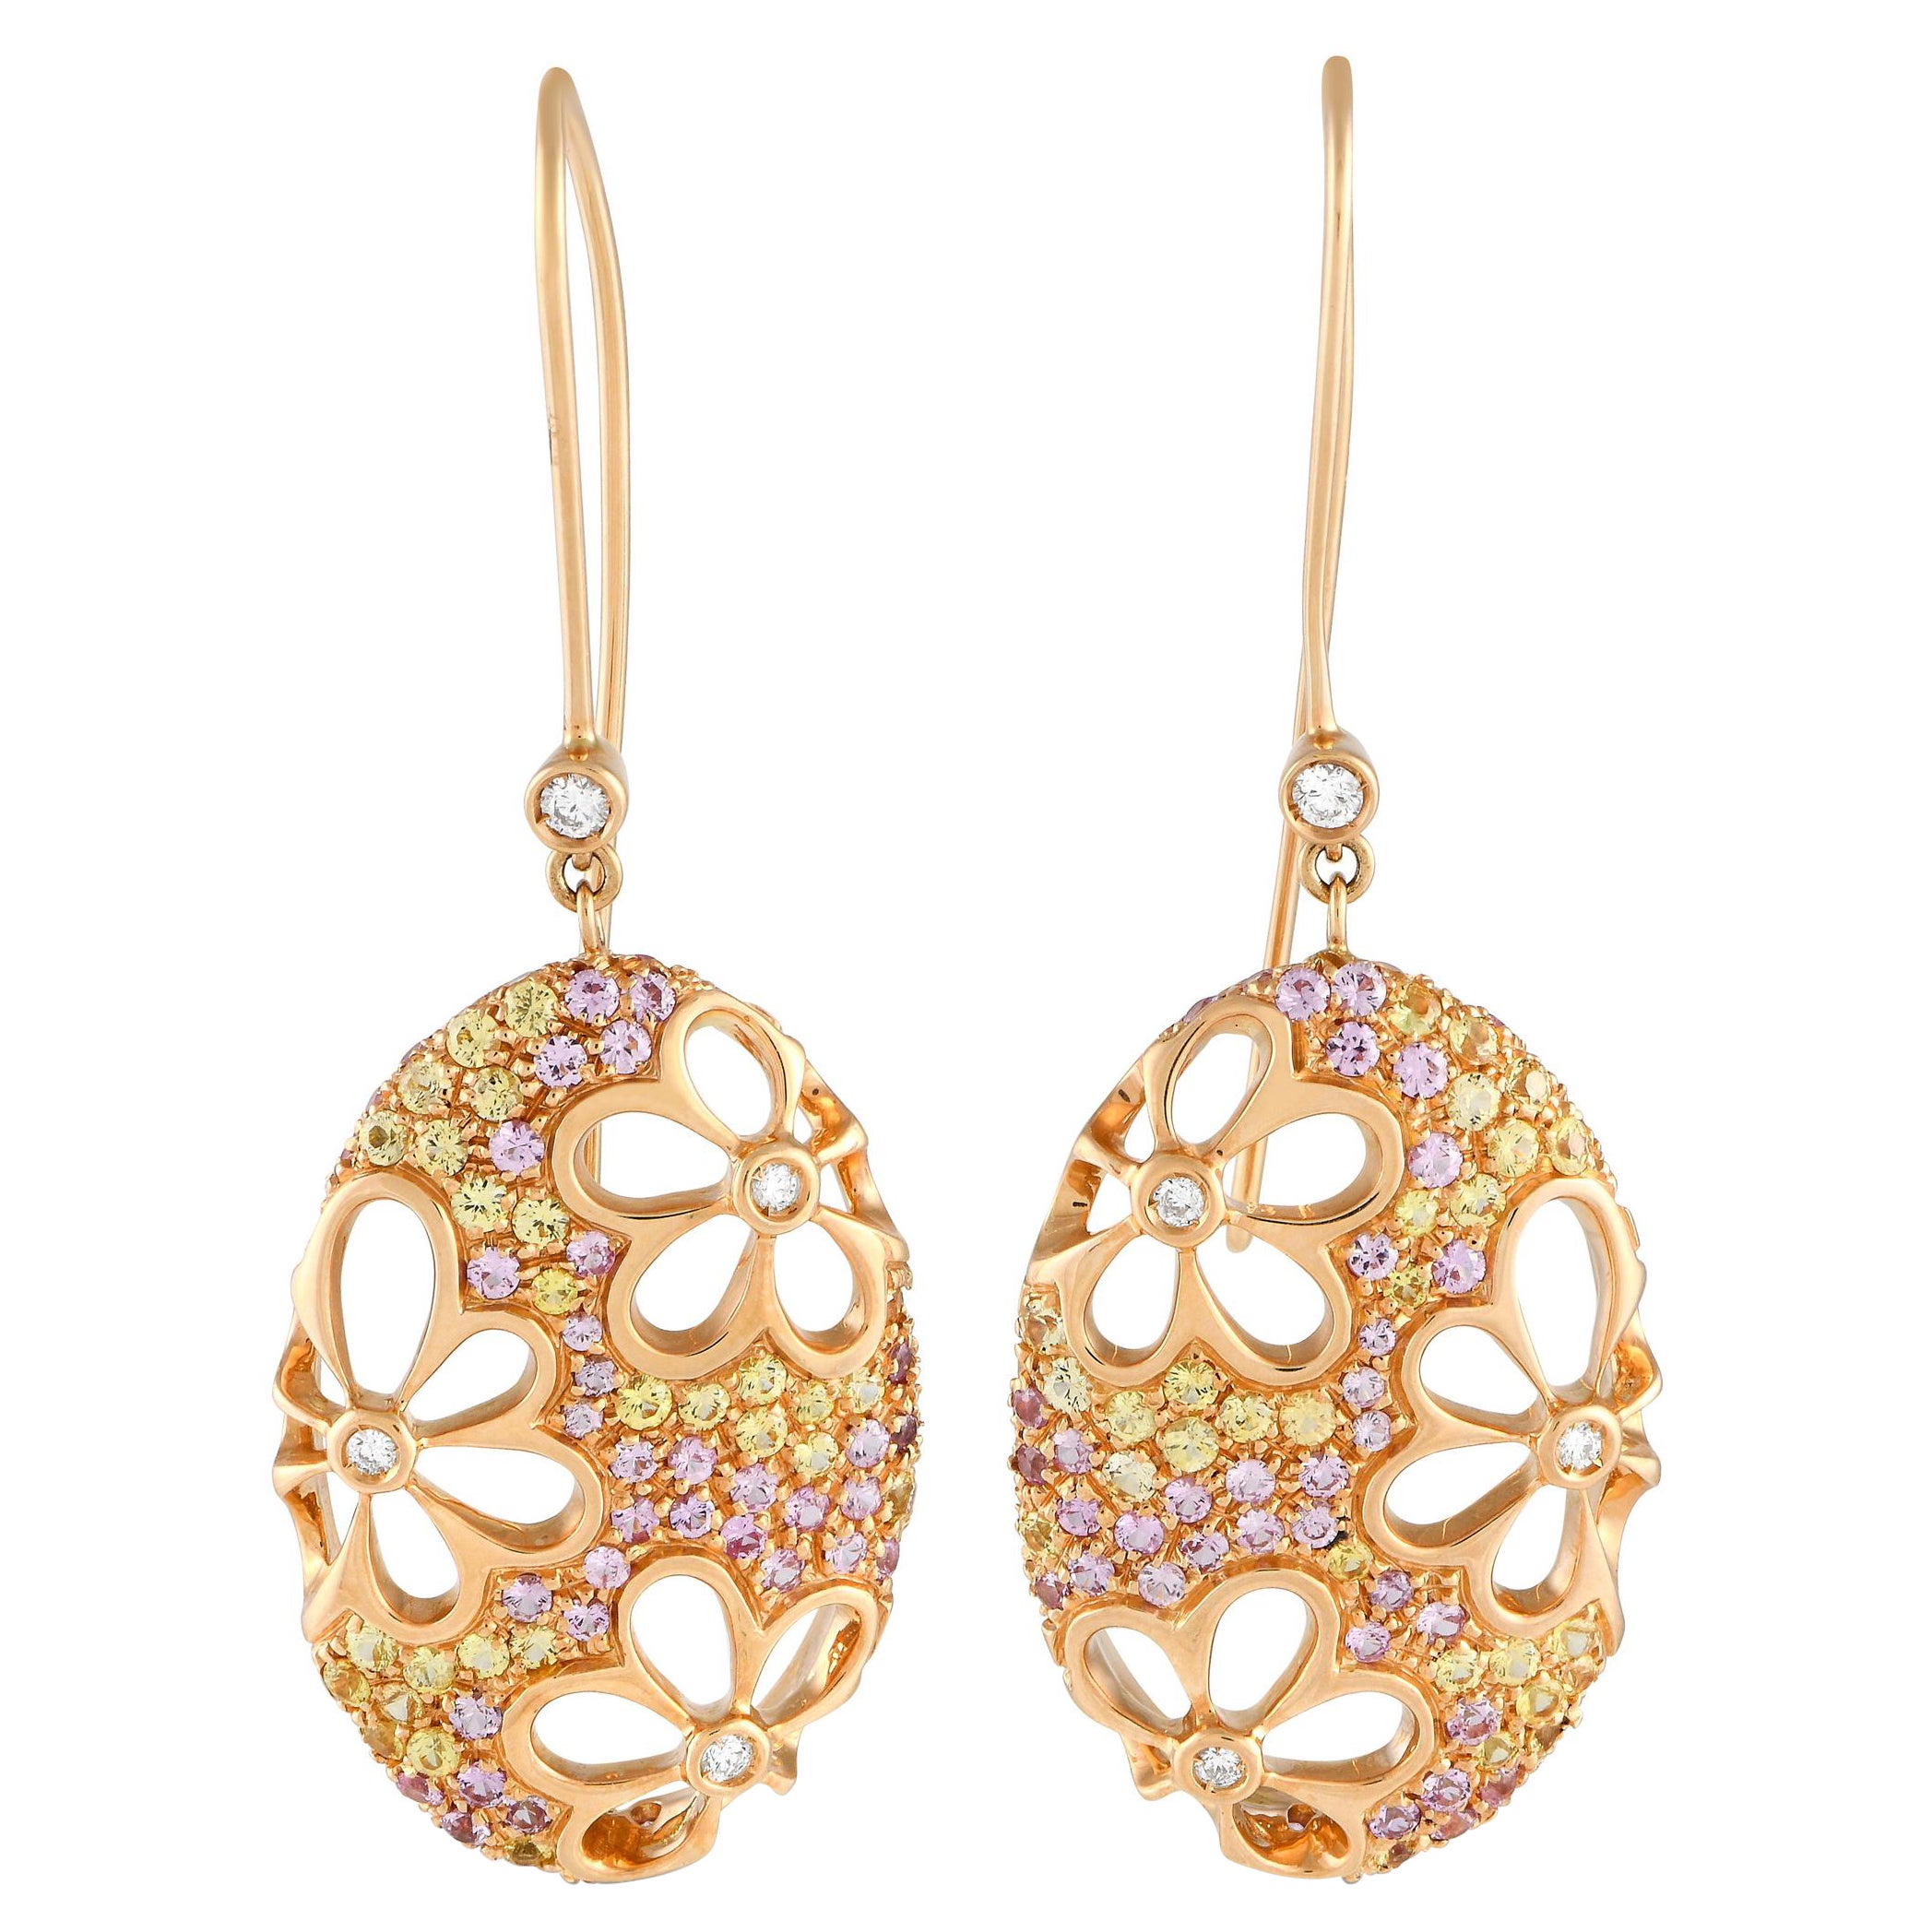 Io Si 18Karat Rose Gold 0.19Carat Diamond and Sapphire Earrings For Sale